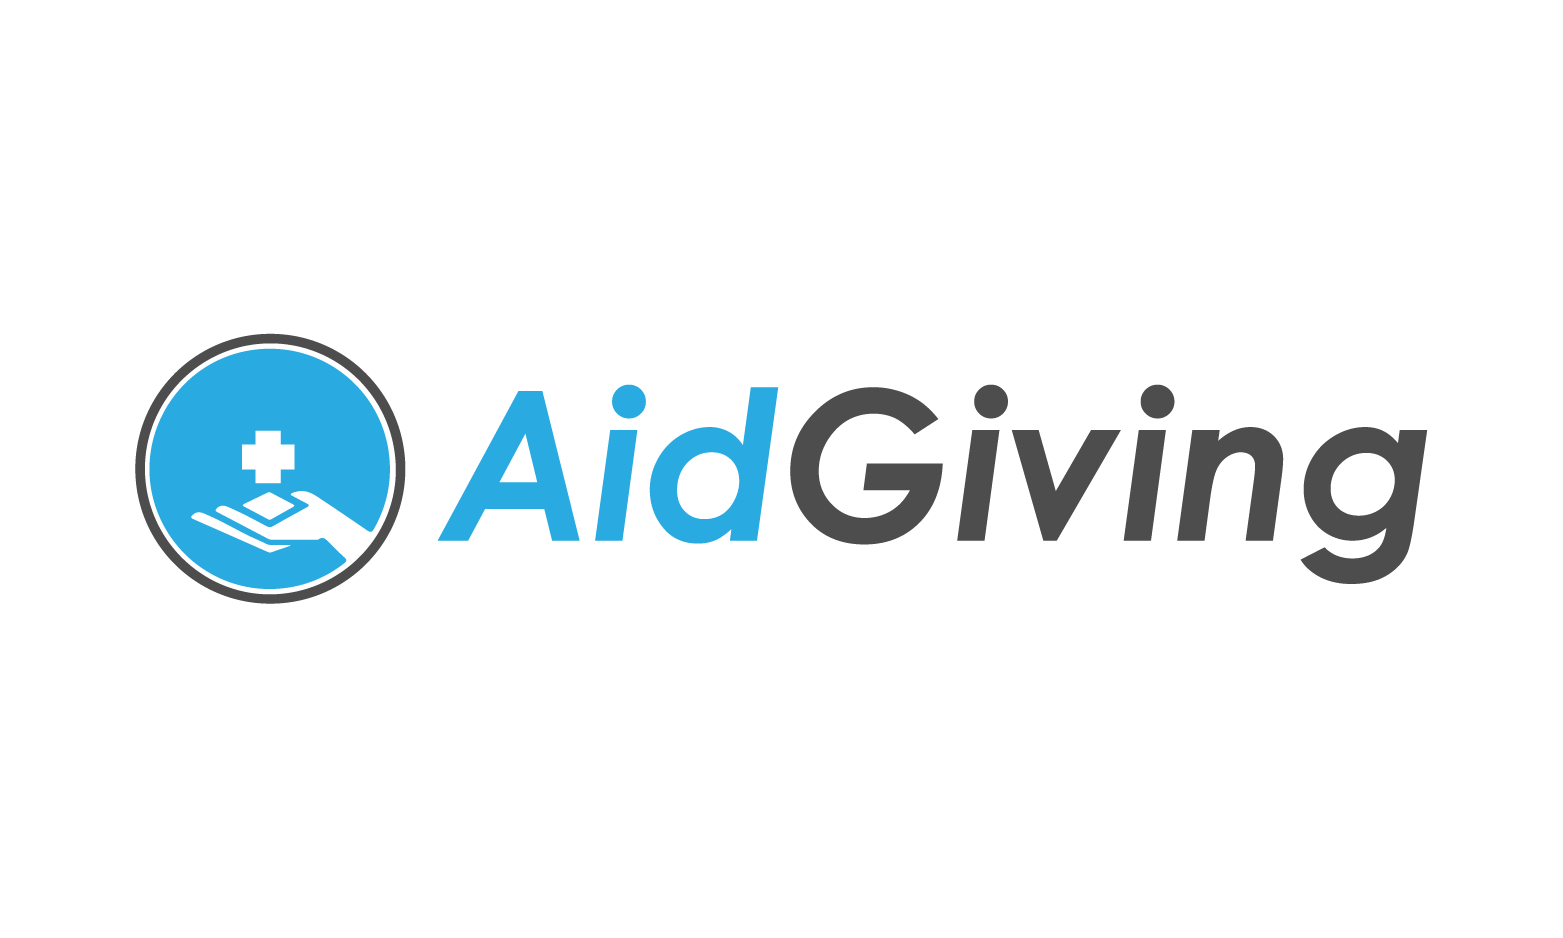 AidGiving.com - Creative brandable domain for sale